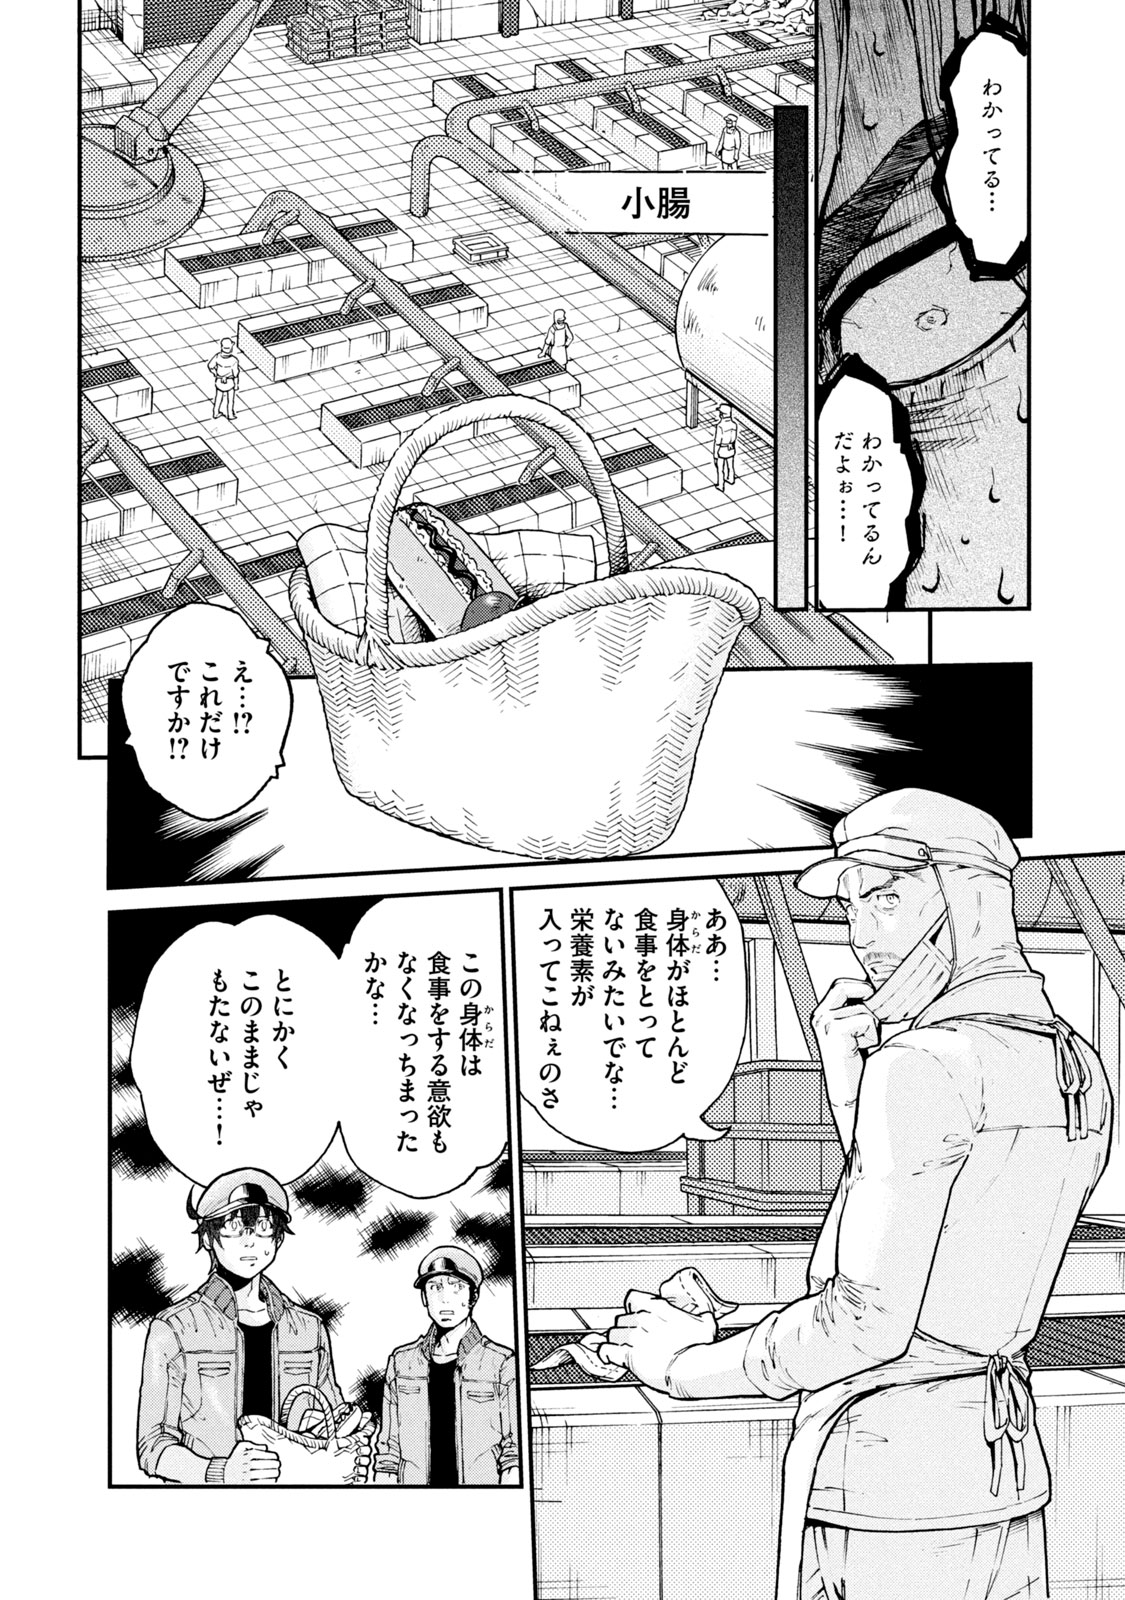 Hataraku Saibou BLACK - Chapter 33 - Page 8